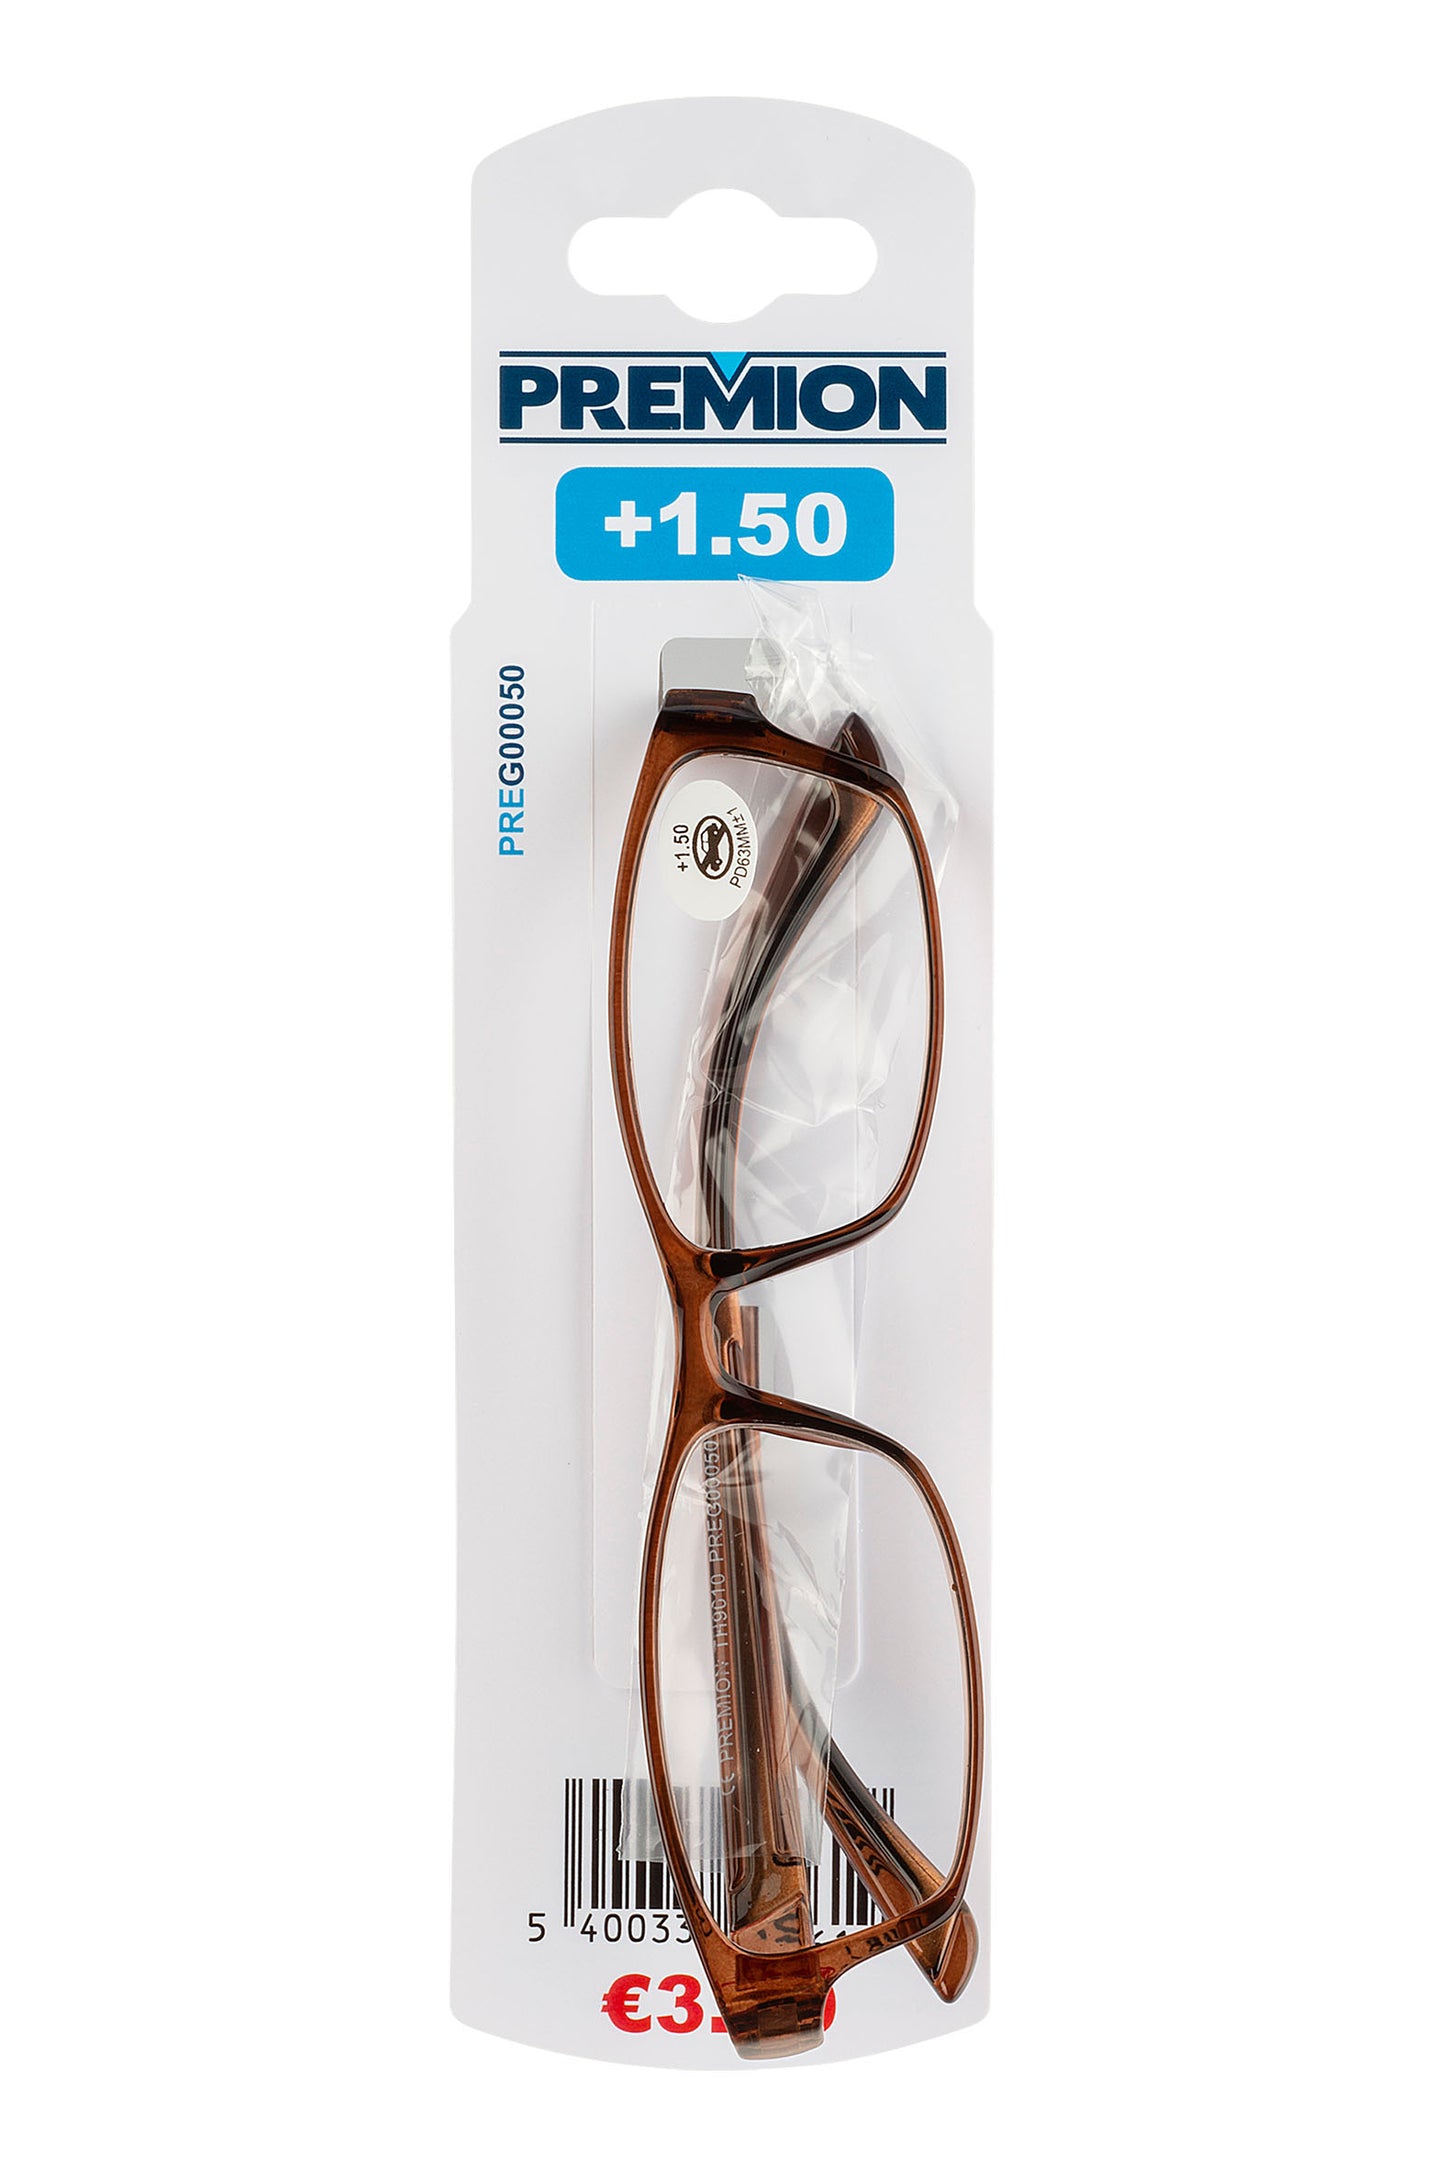 Premion - Reading Glasses - Brown/Black (Model 3)